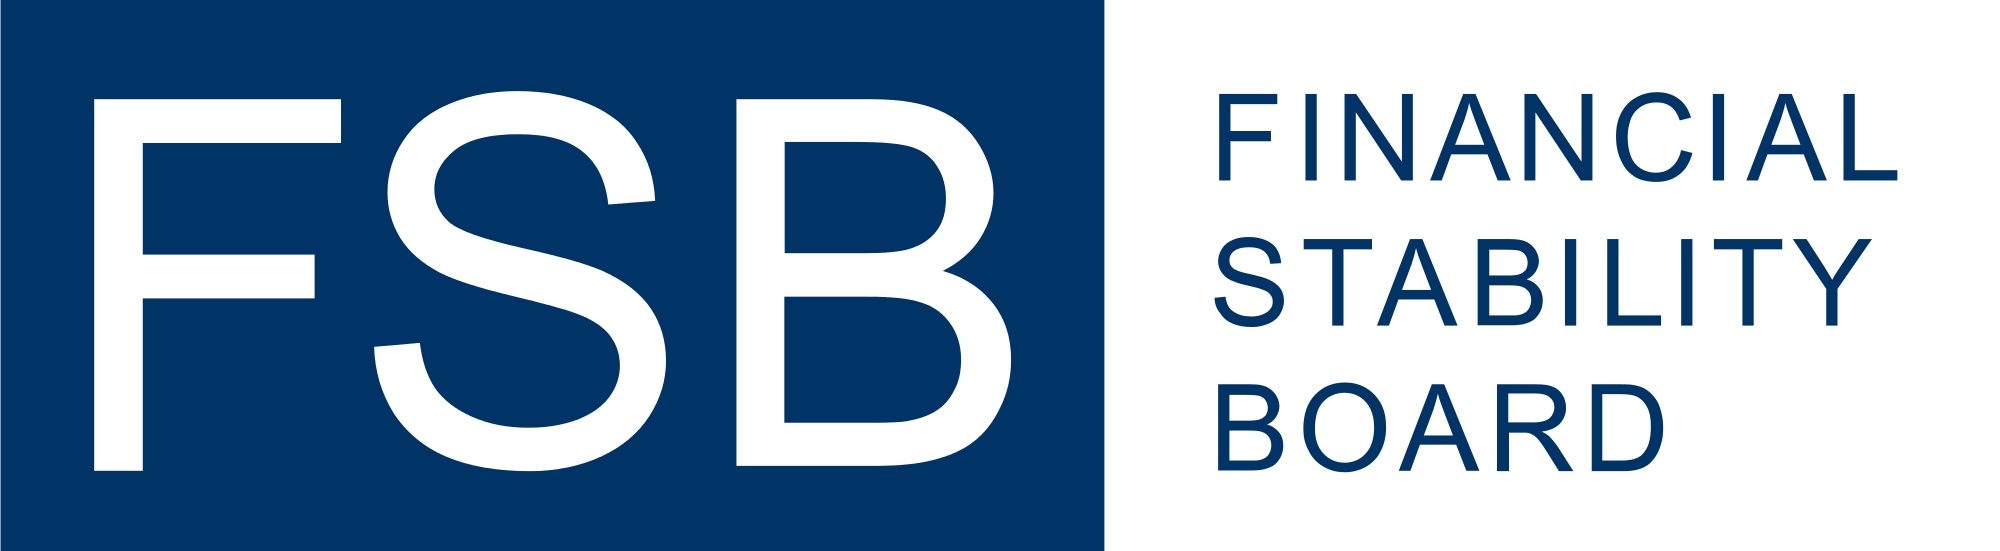 financial stability board logo